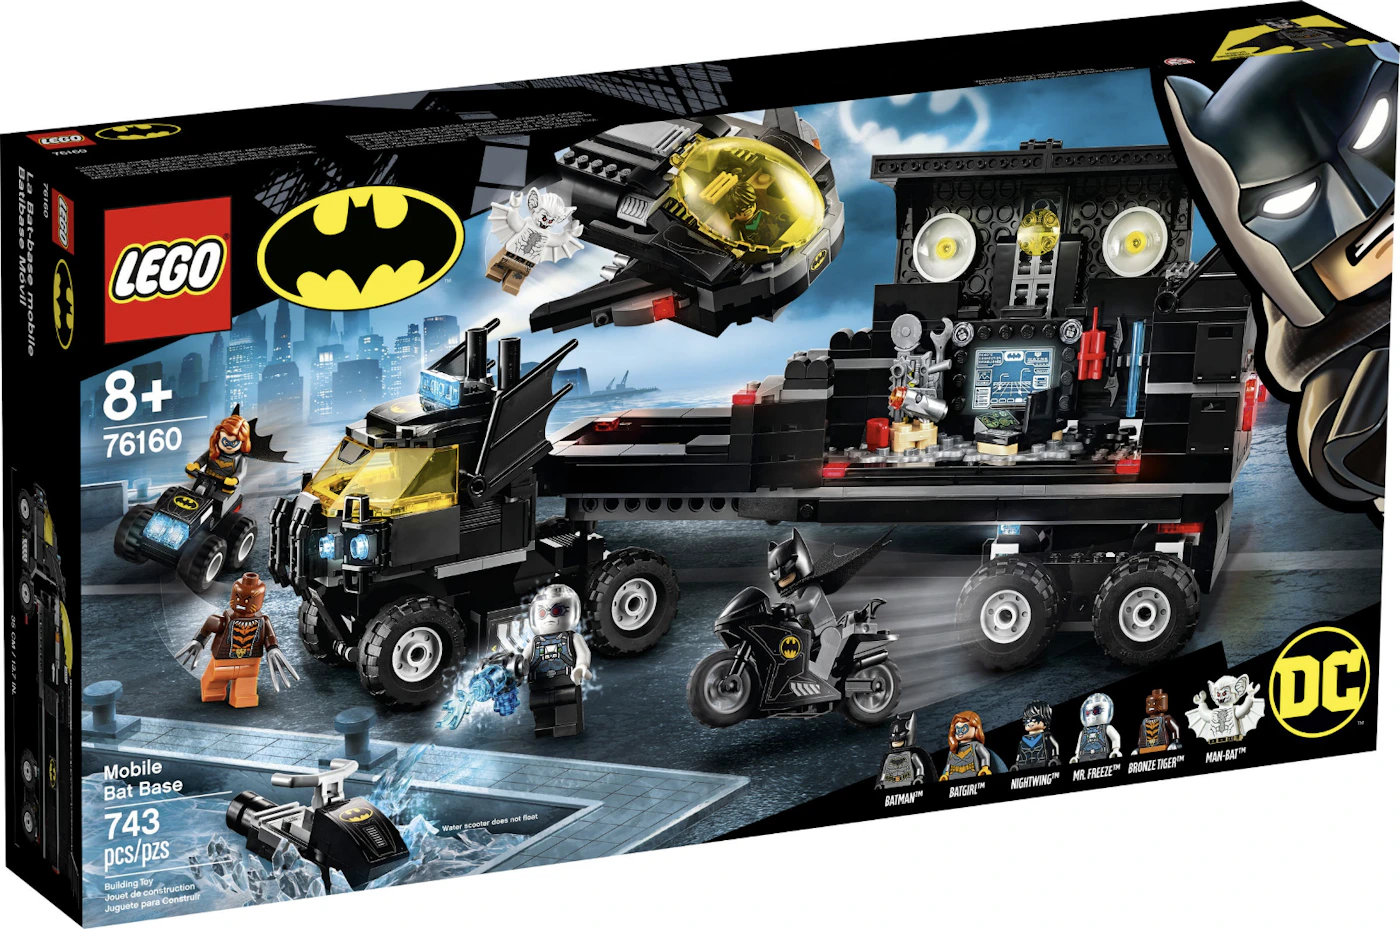 LEGO DC Comics Super Heroes Mobile Bat Base Set 76160 - US